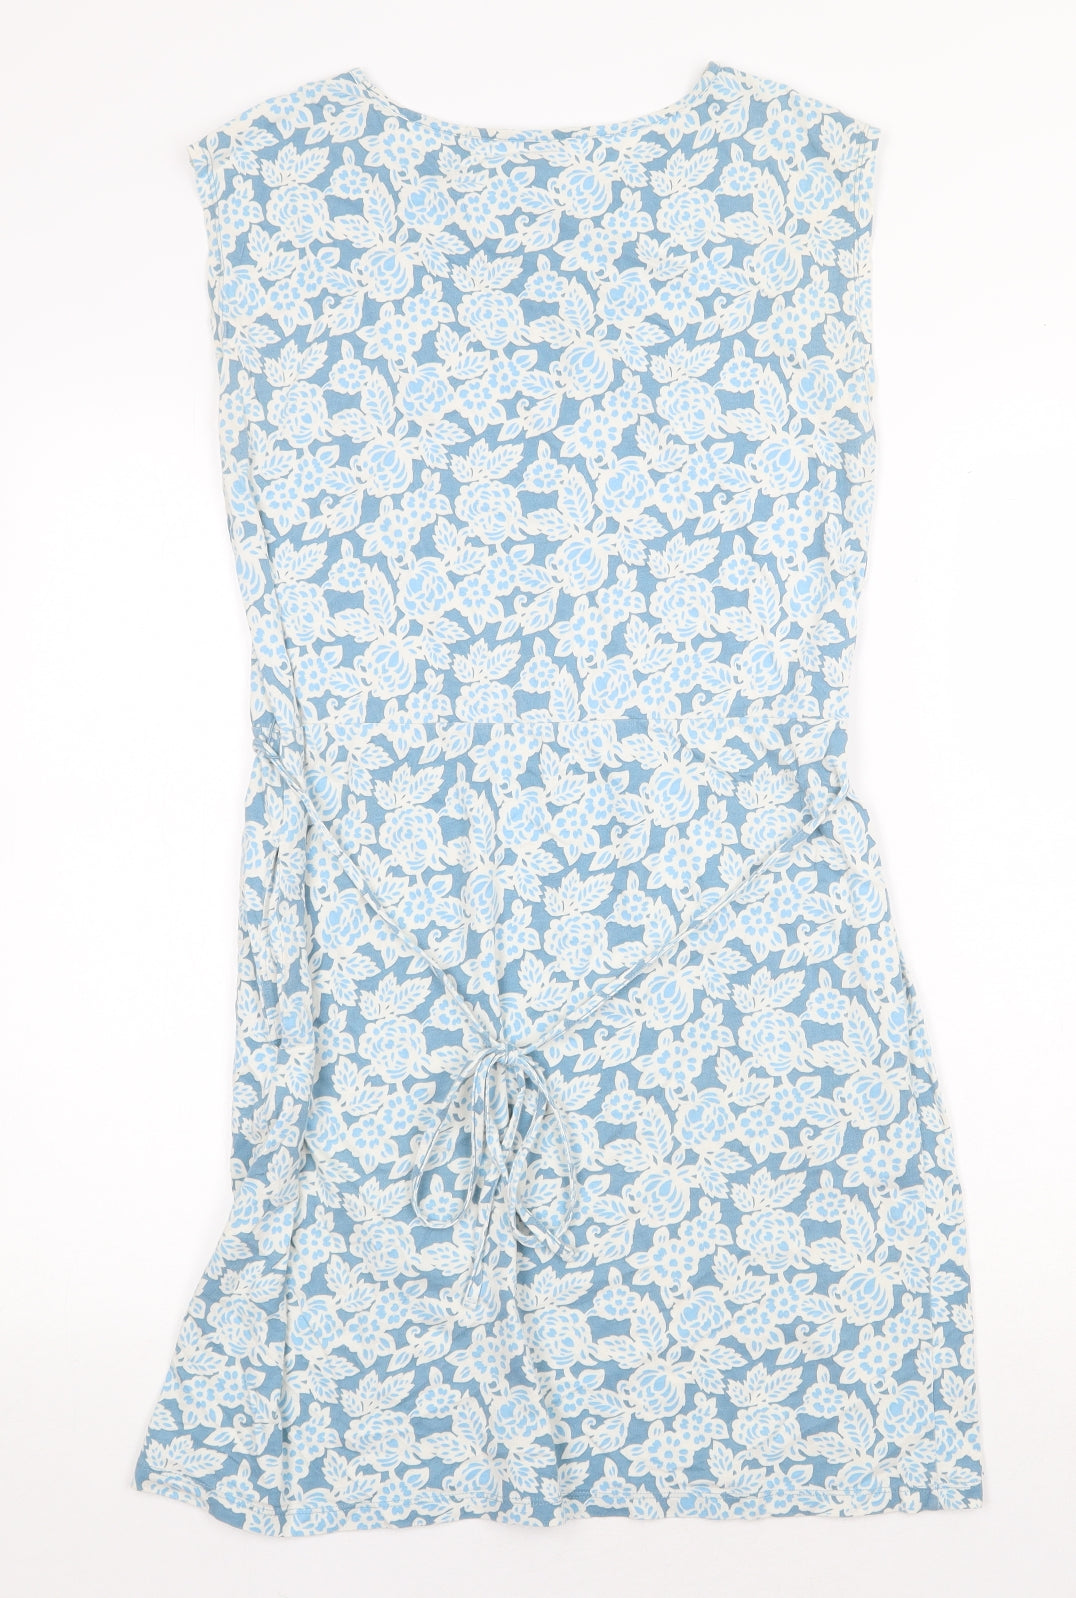 Cath Kidston Womens Blue Floral 100% Cotton Shift Size S Round Neck Tie